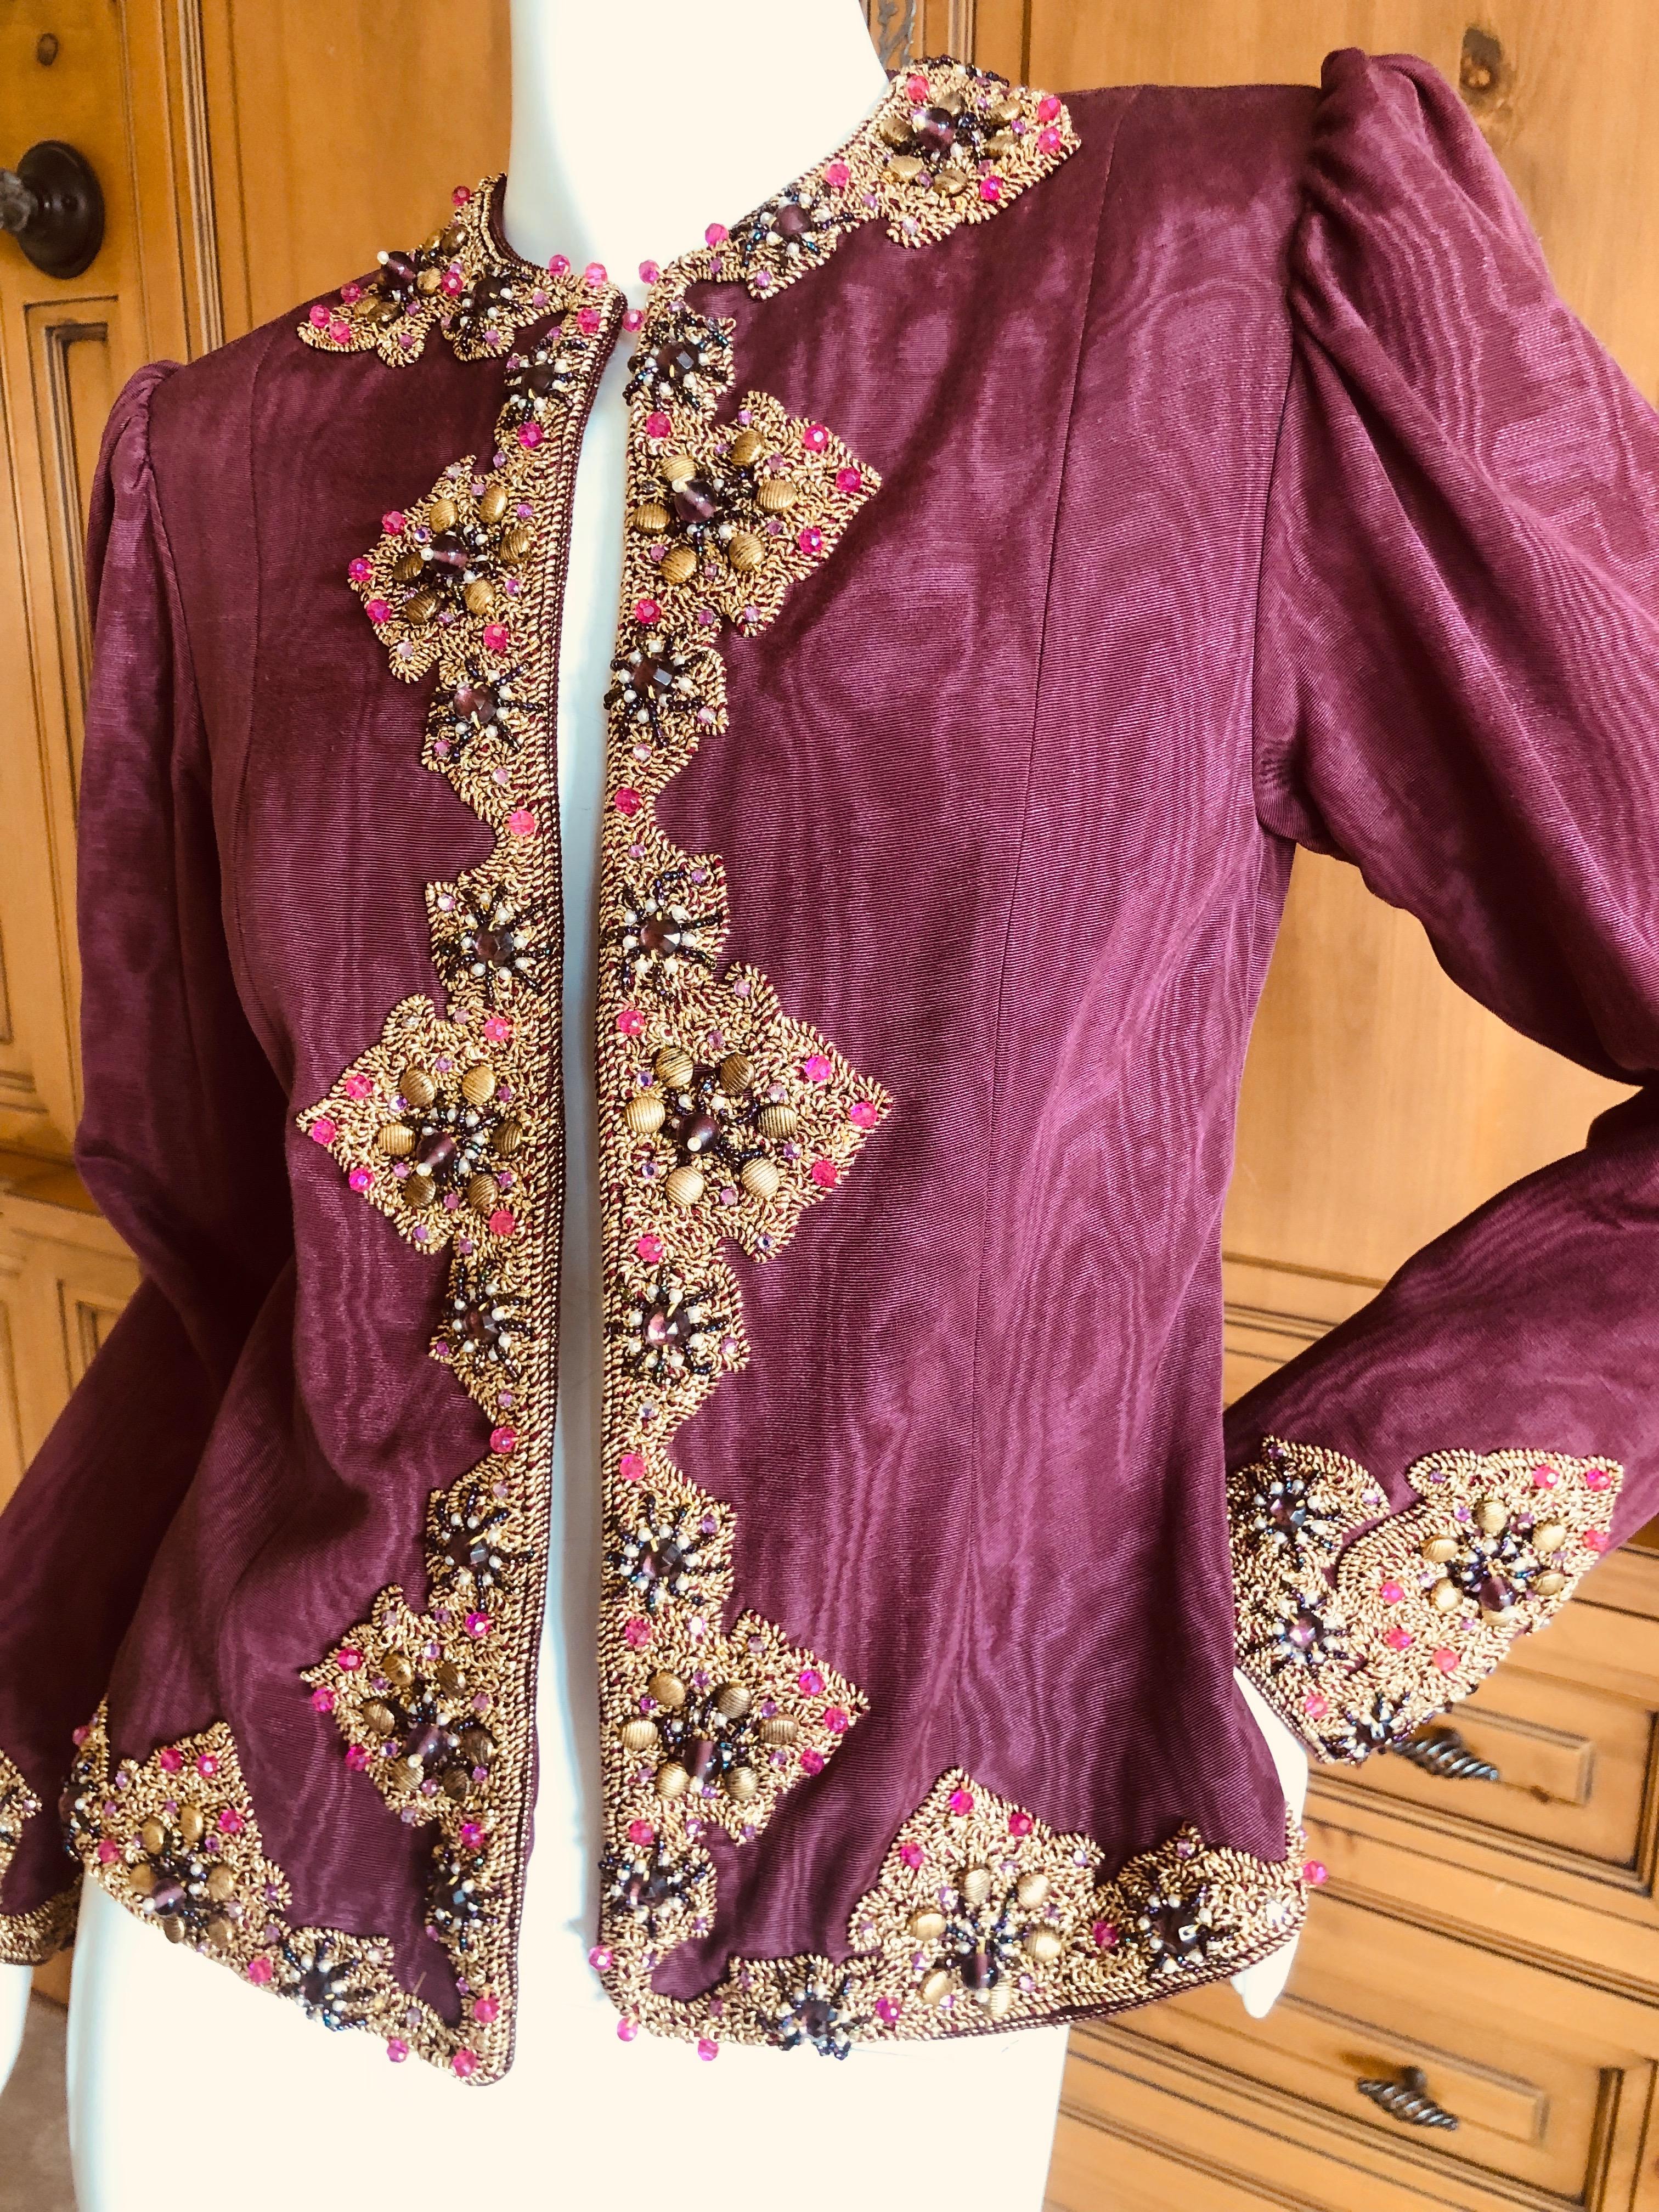 Oscar de la Renta 1970's Moire Silk Evening Jacket with Arabesque Embellishments For Sale 1